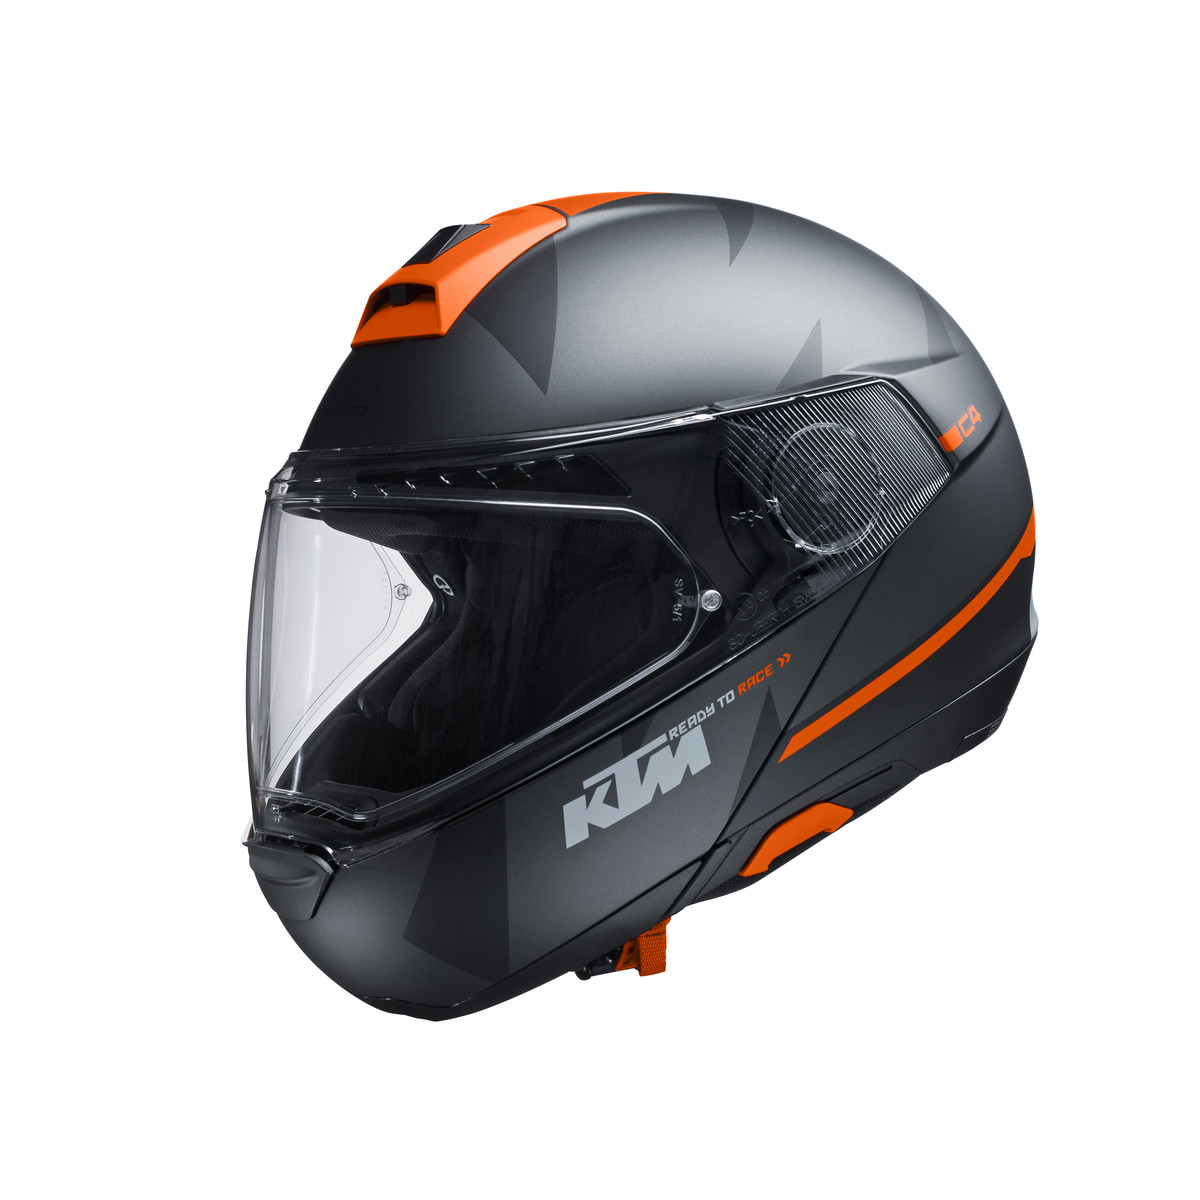 Main image of KTM C4 Modular Touring Helmet by Schuberth